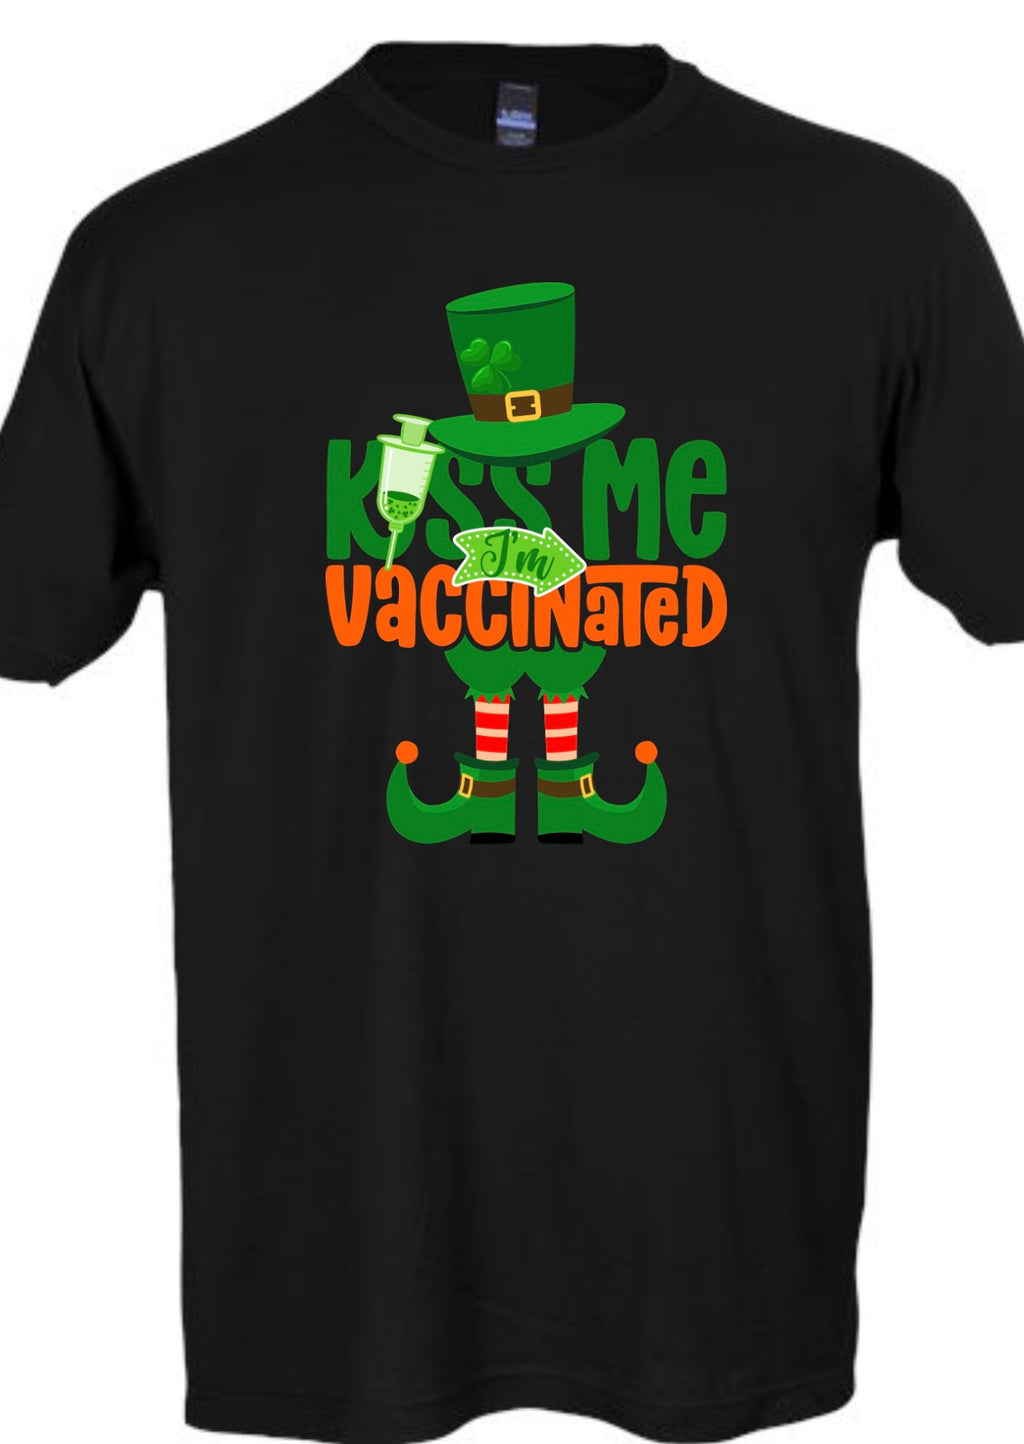 Kiss me I’m vaccinated T-shirt